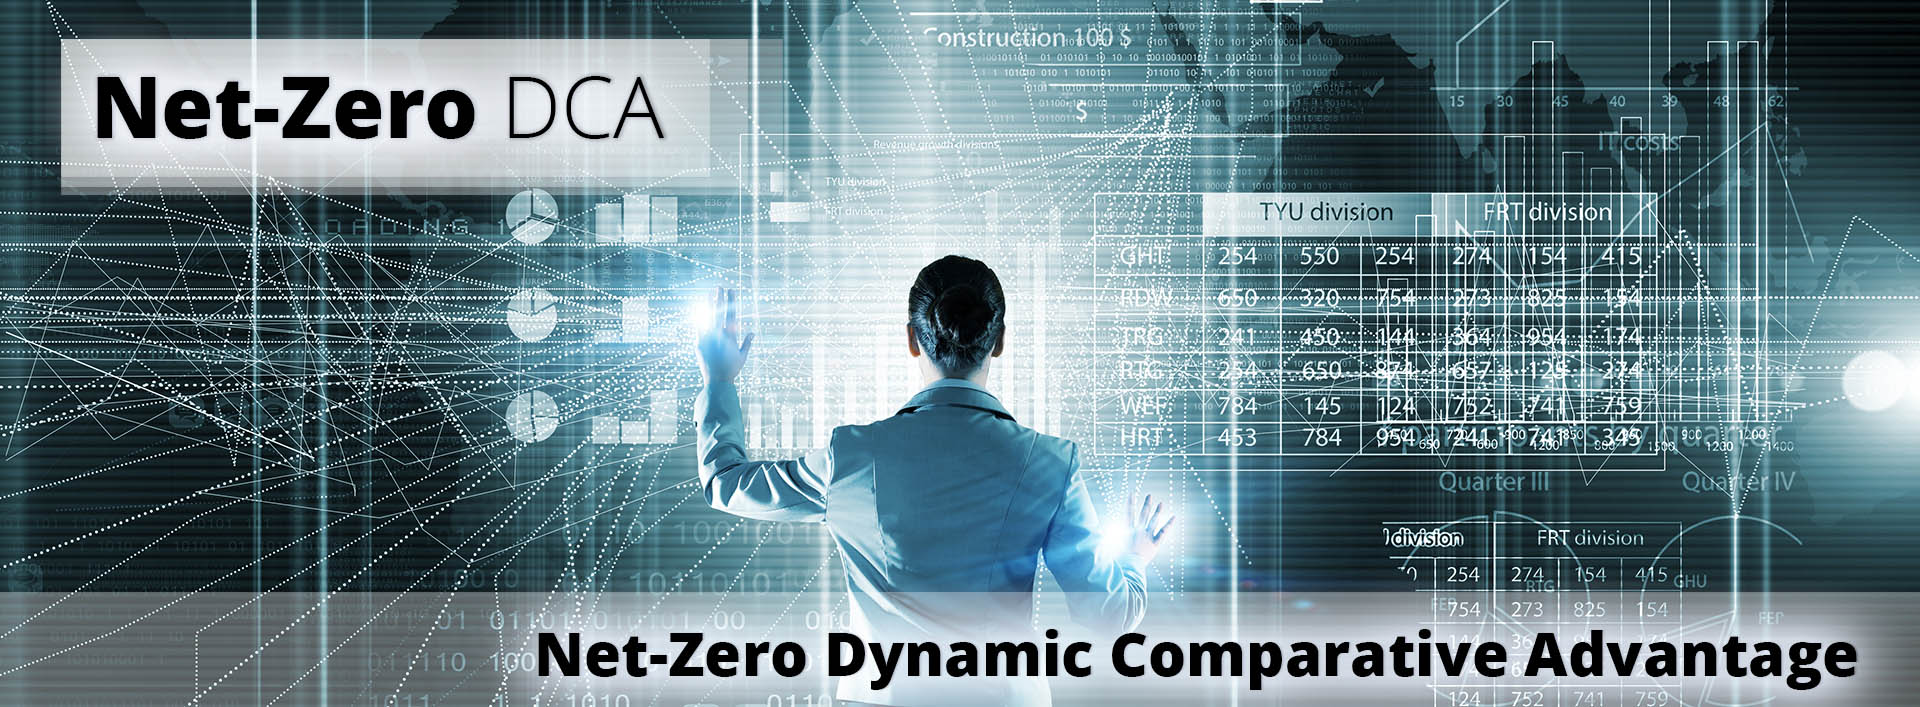 Net-Zero_DCA_-_Dynamic_Comparative Advantage__1.08